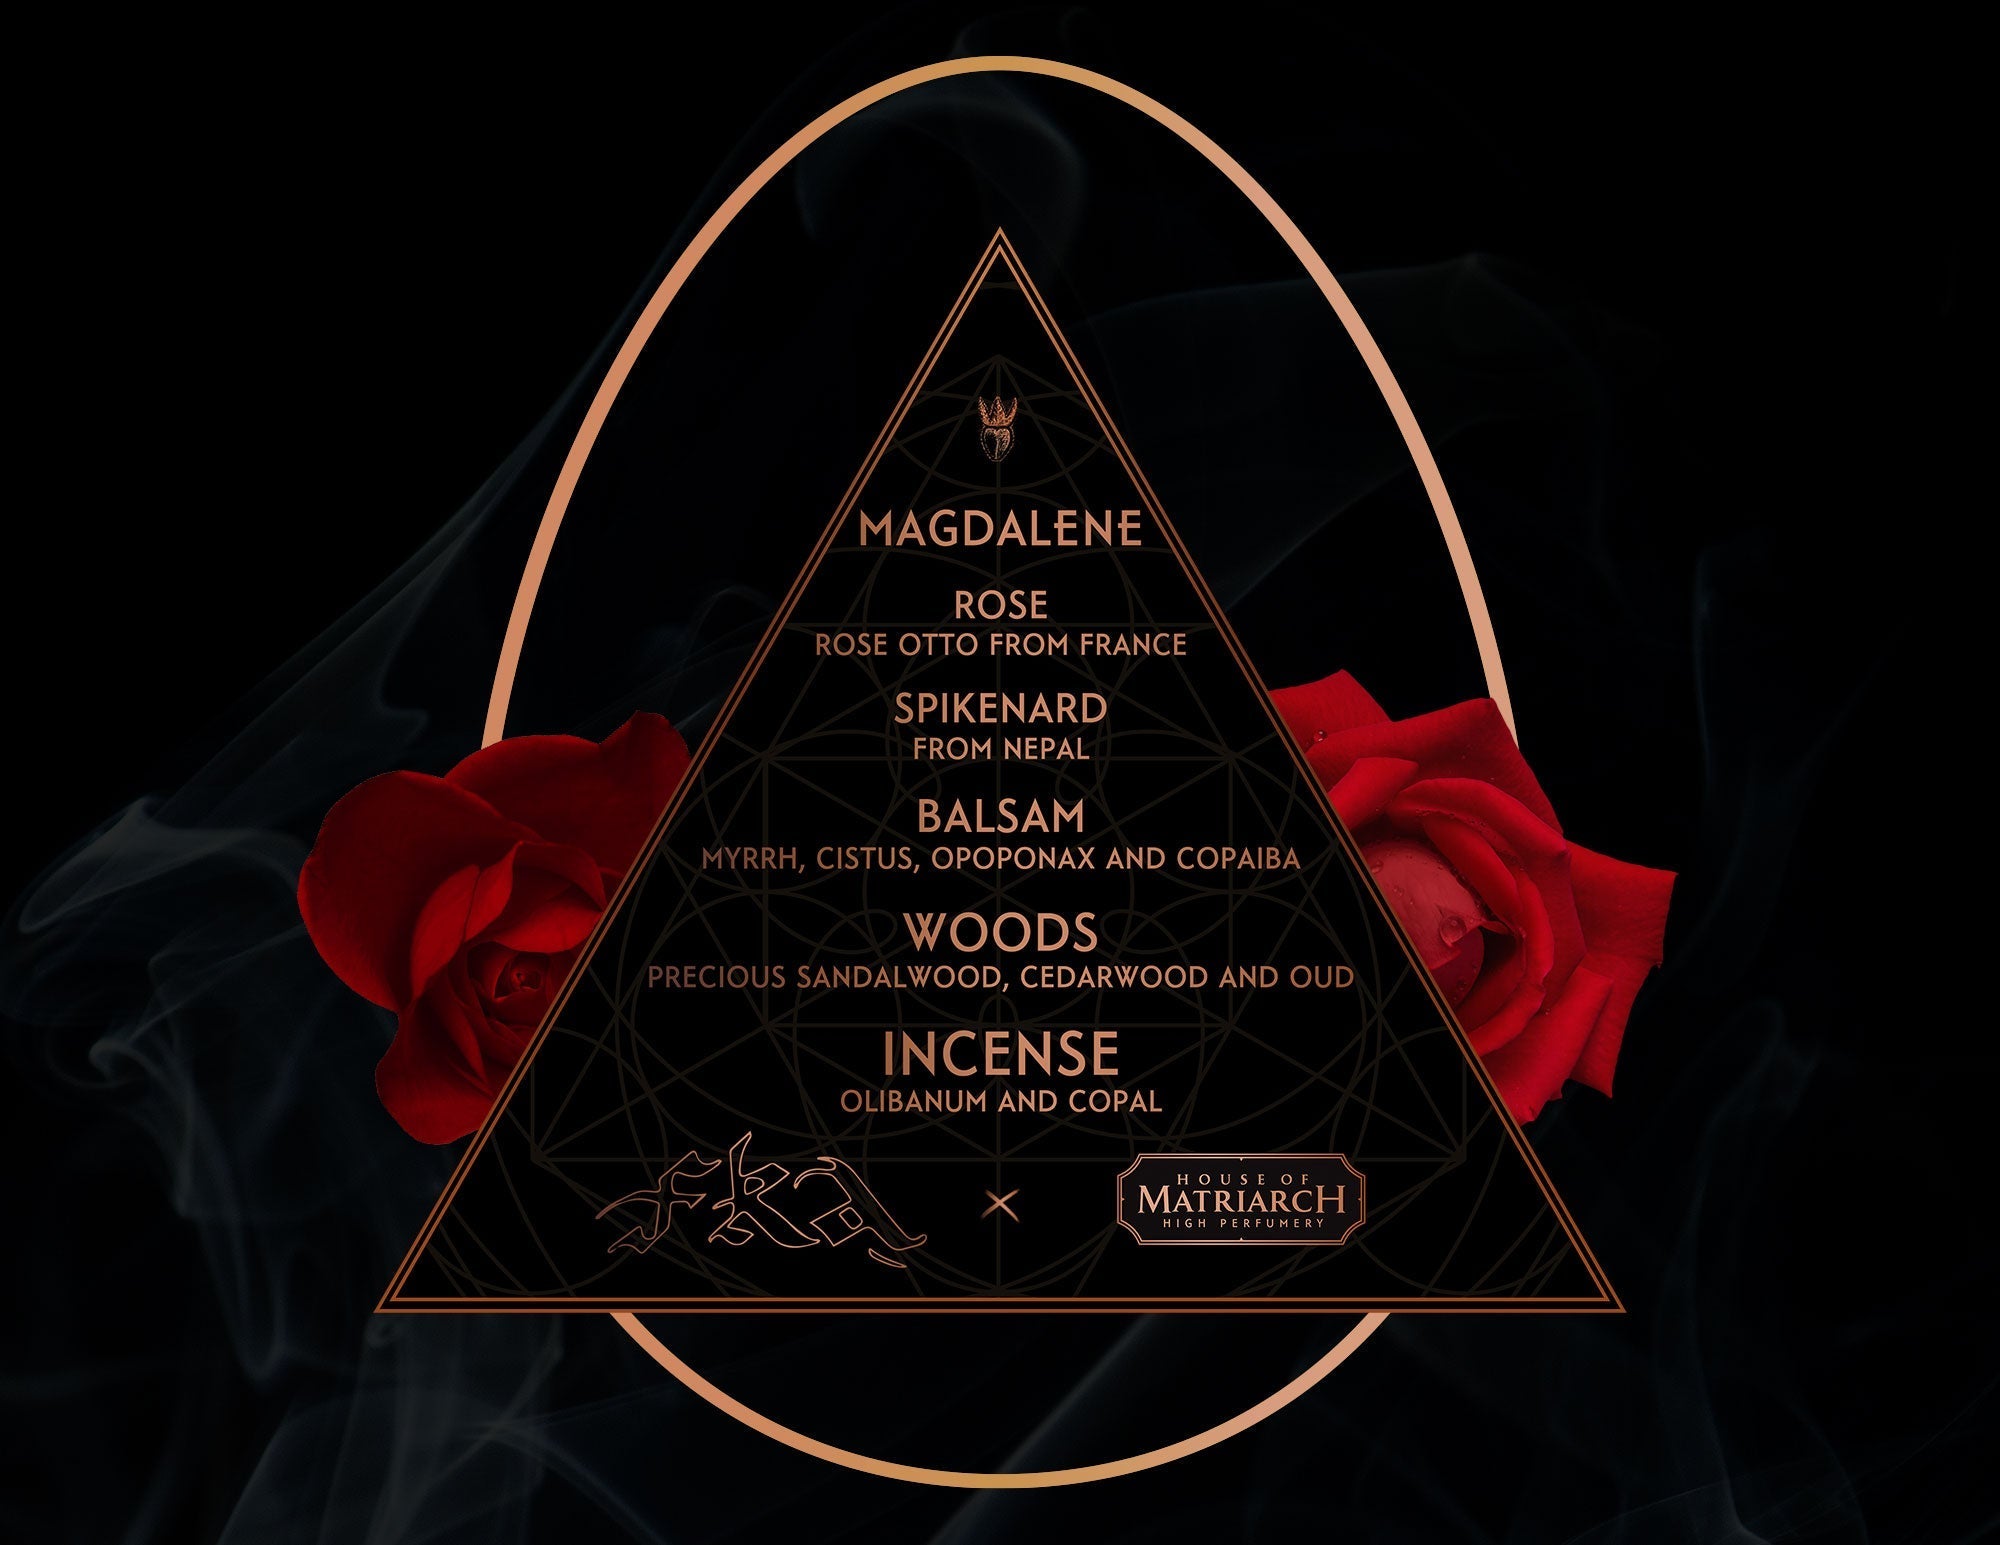 House of Matriarch High Perfumery MAGDALENE - FKA twigs High Perfumery (Private Label)